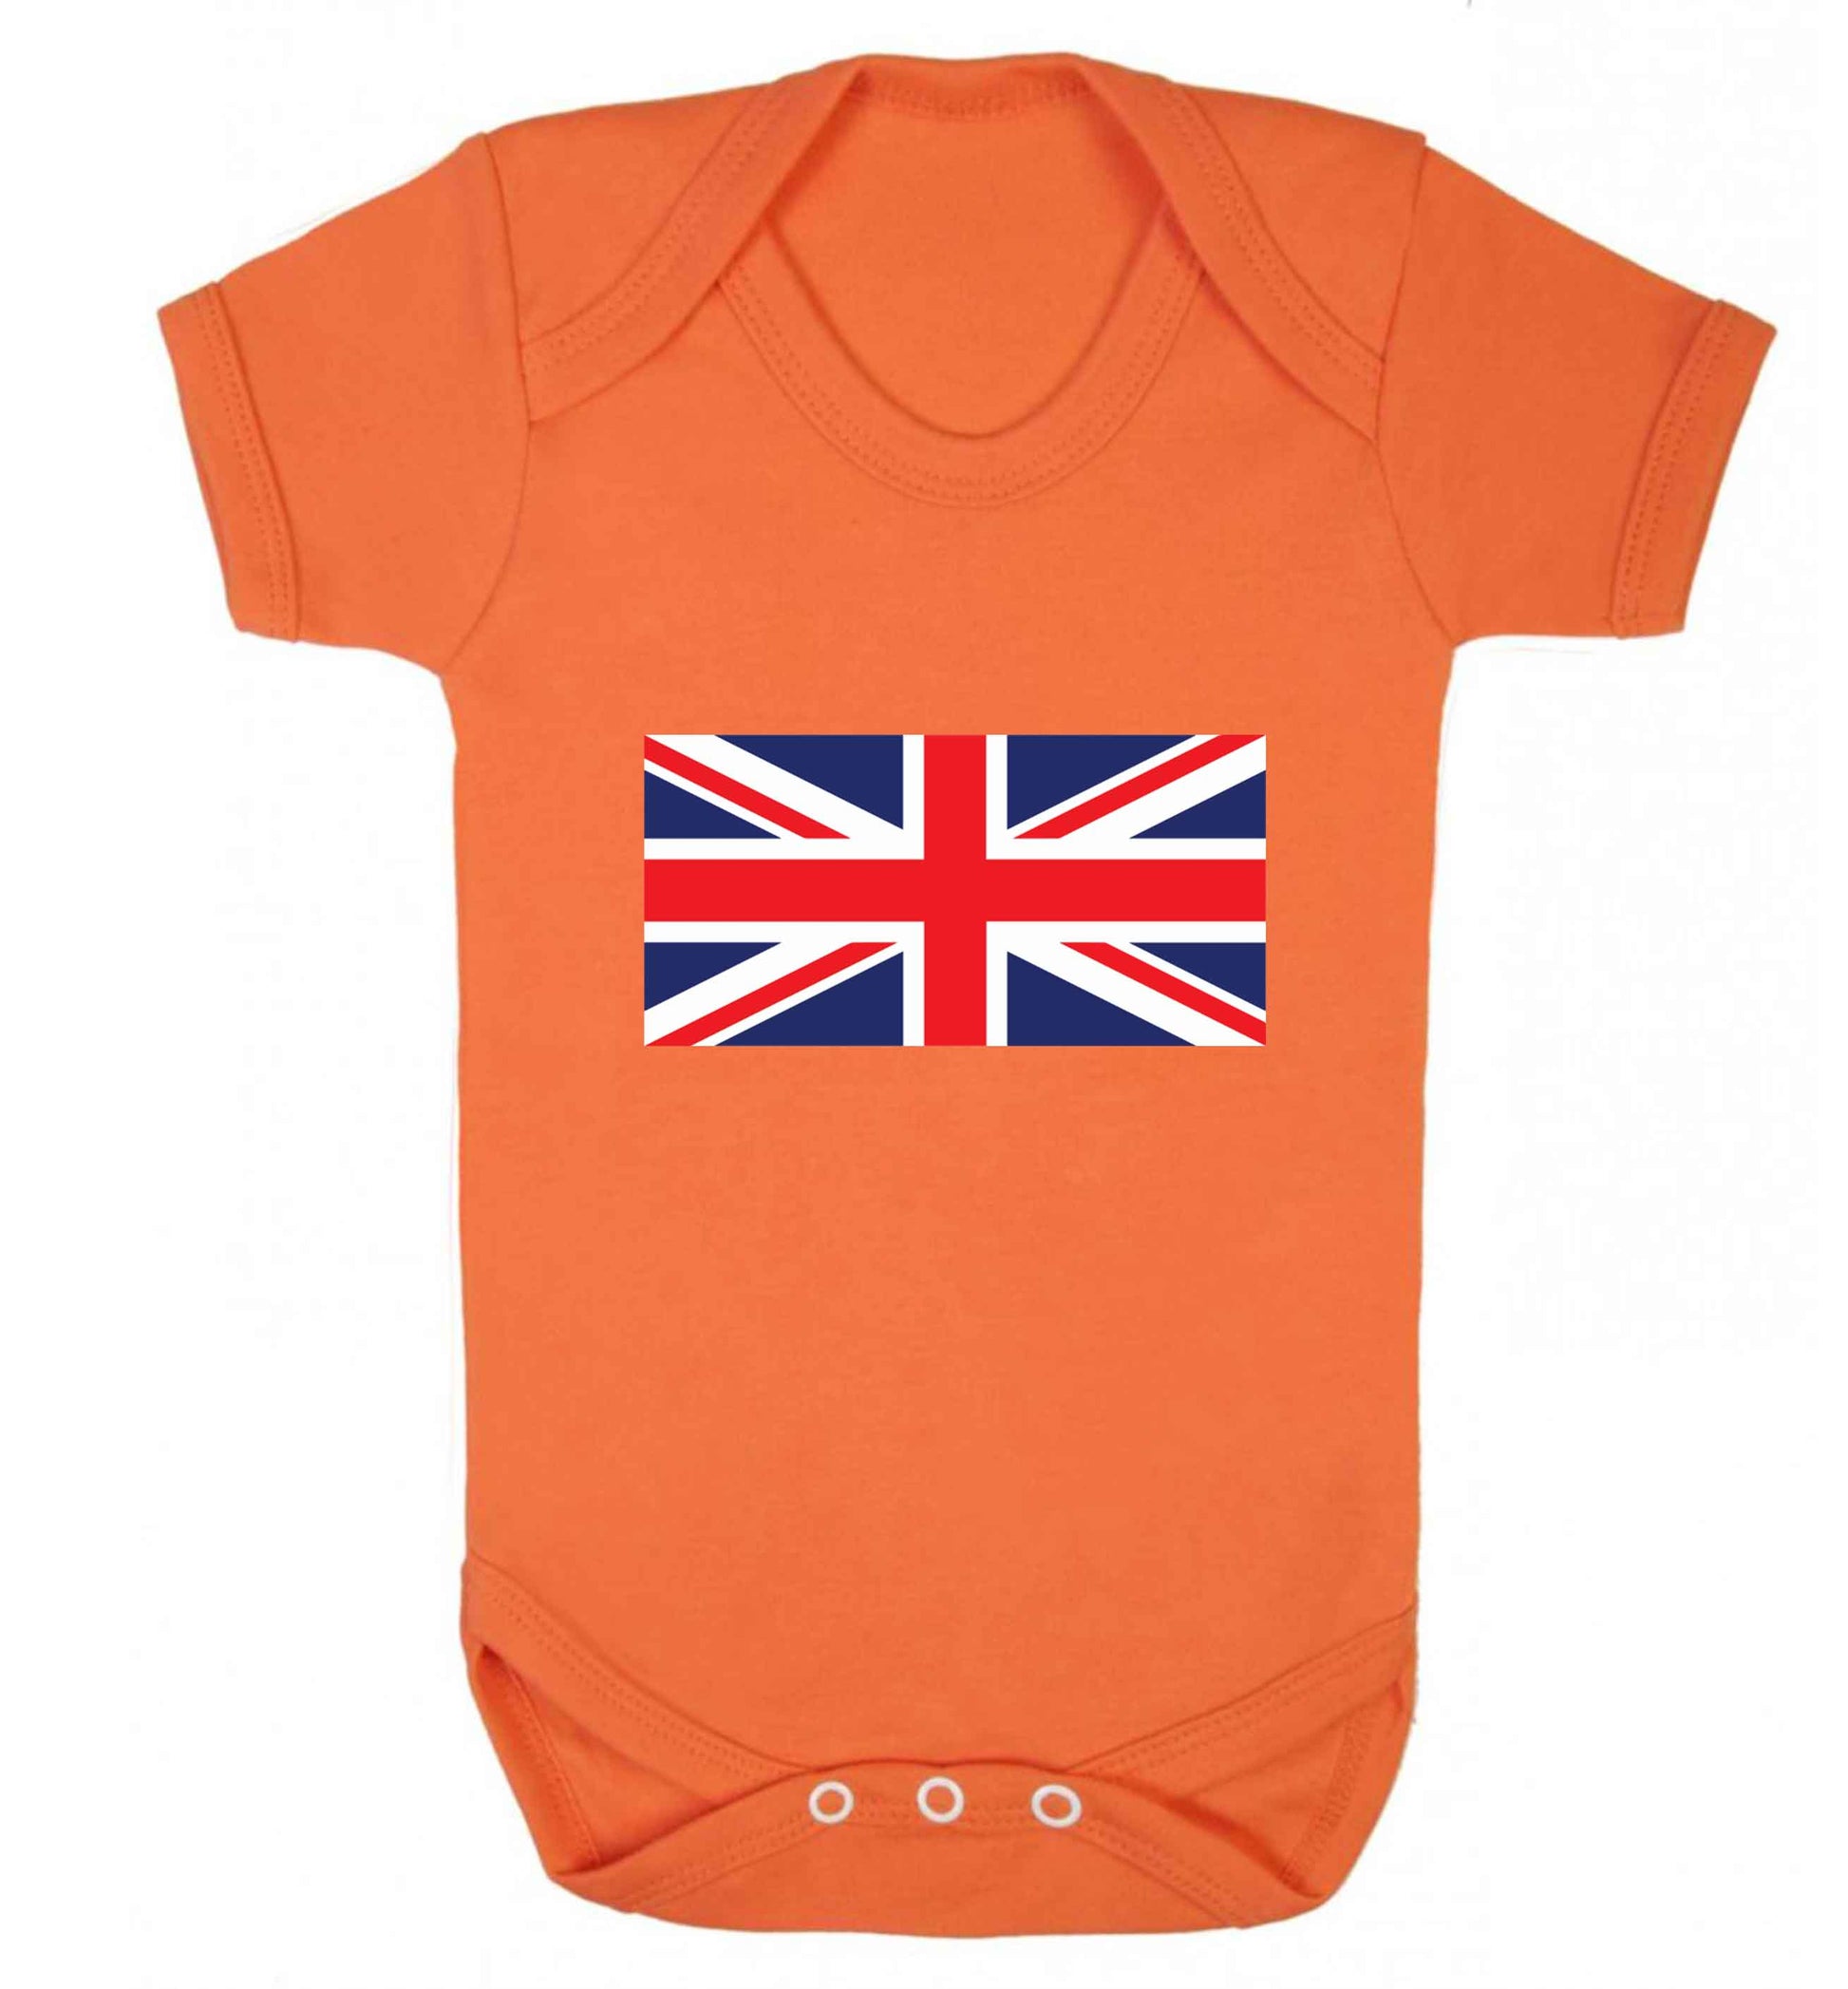 Union Jack baby vest orange 18-24 months